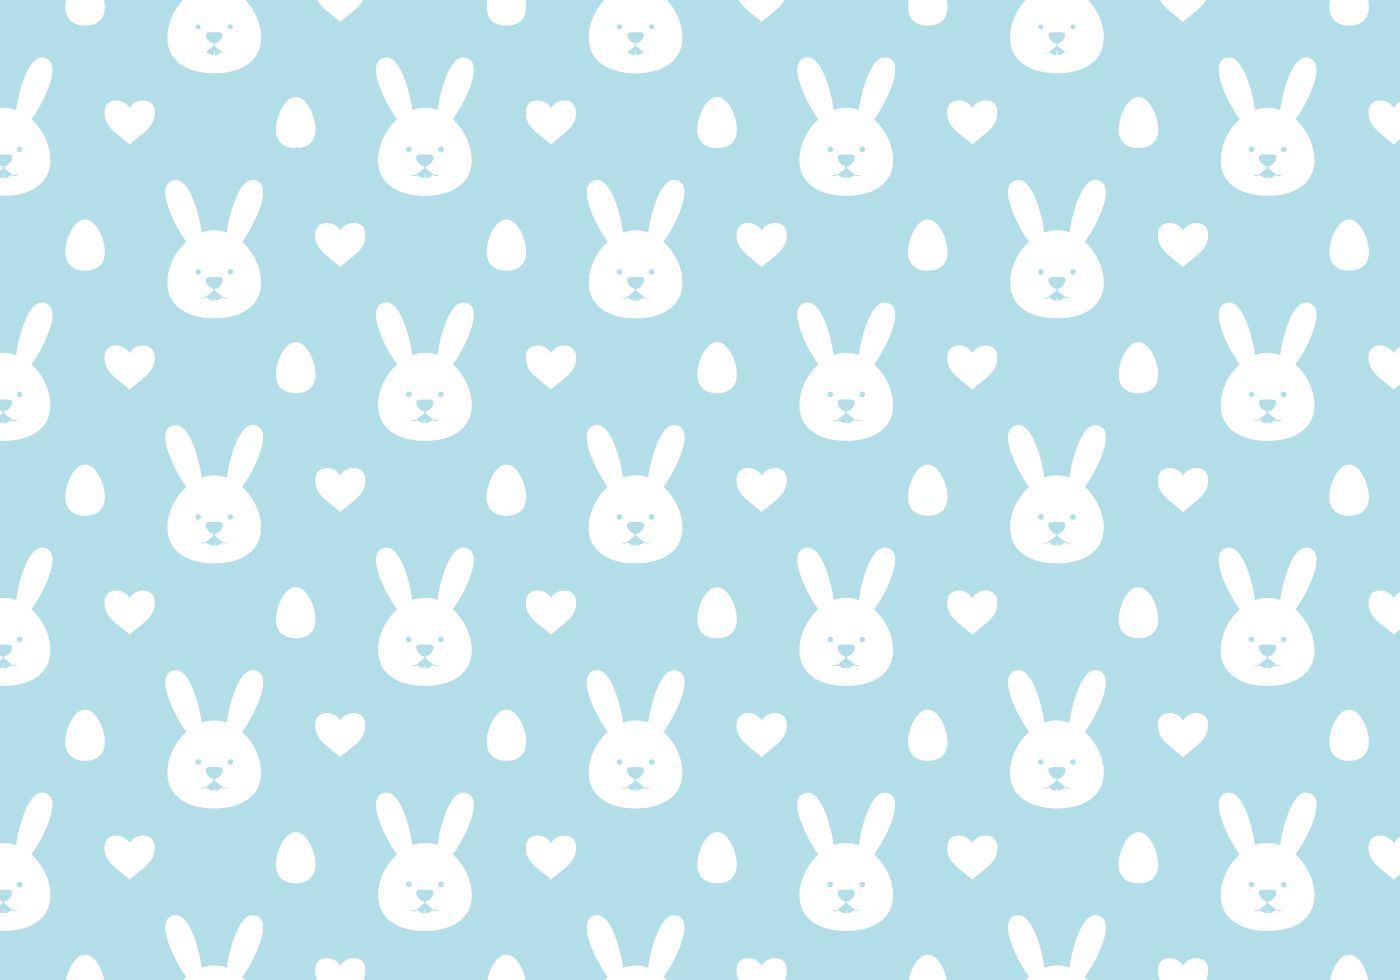 Easter Bunny Wallpaper Background Free Vectors, Clipart Graphics & Vector Art